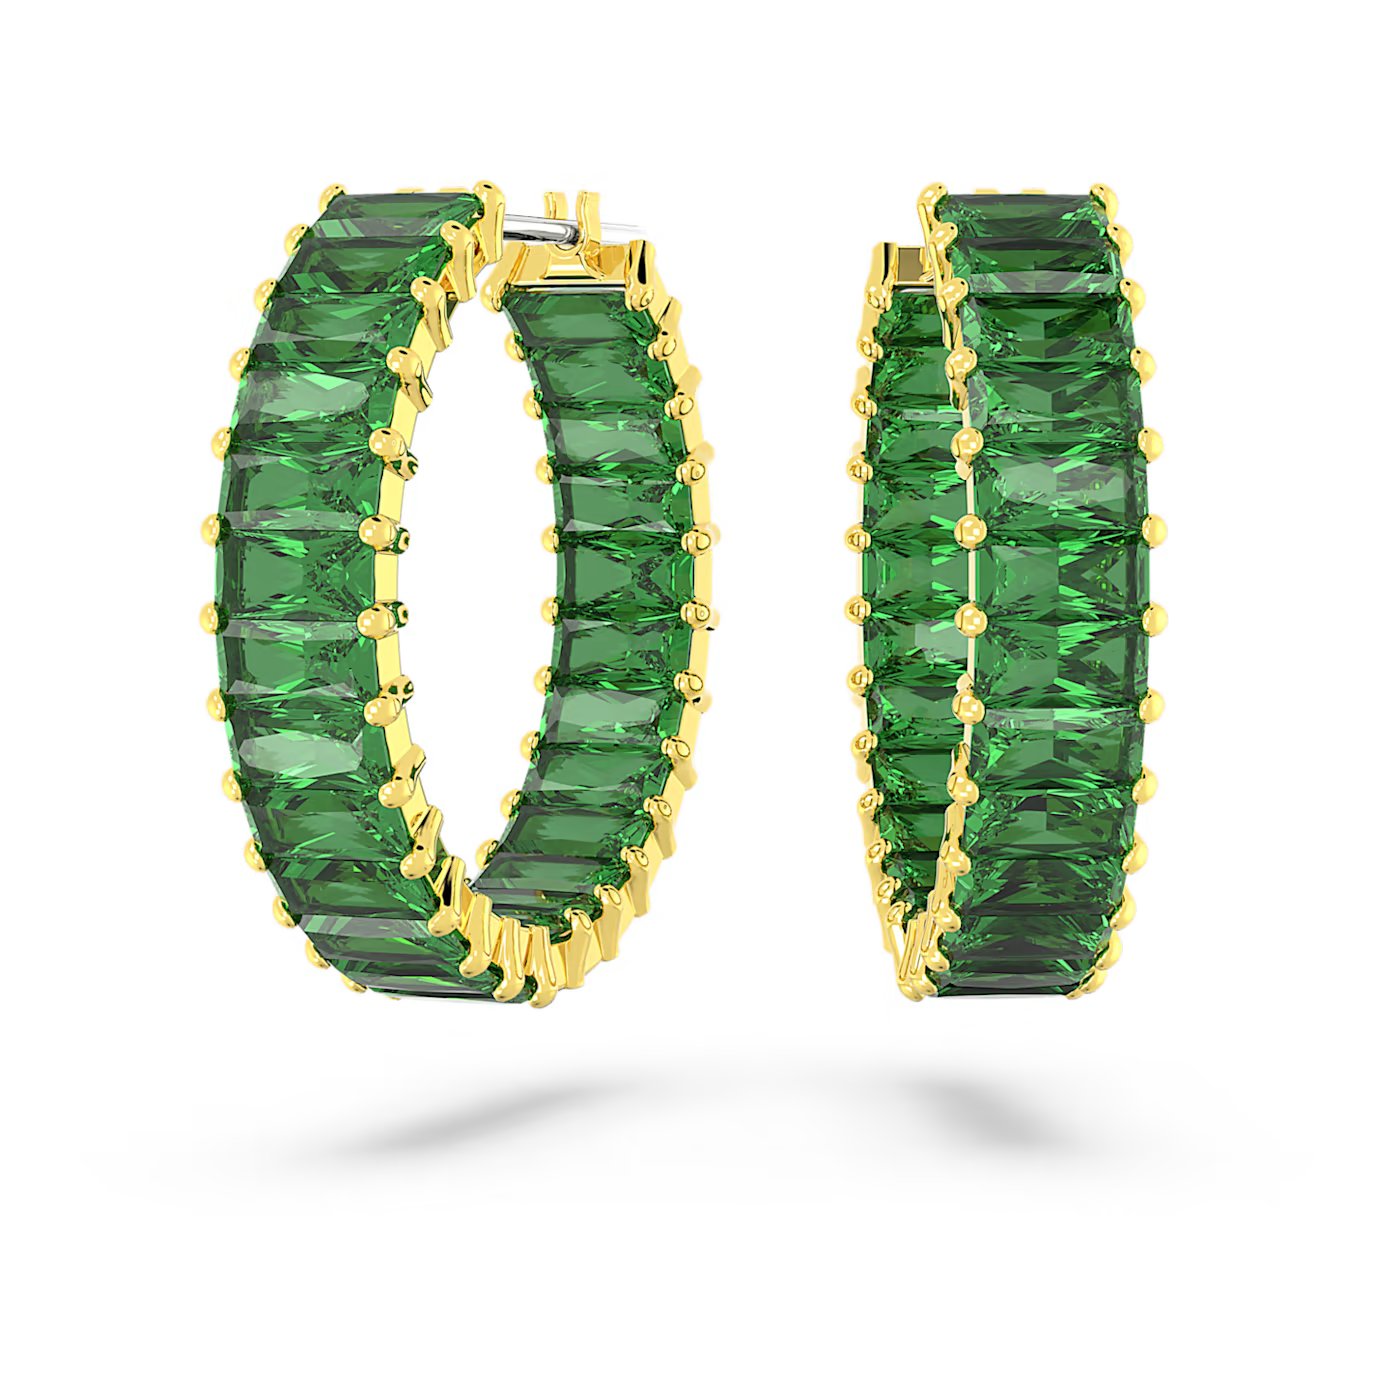 64245986e476f_matrix-hoop-earrings--baguette-cut--green--gold-tone-plated-swarovski-5658651.jpg